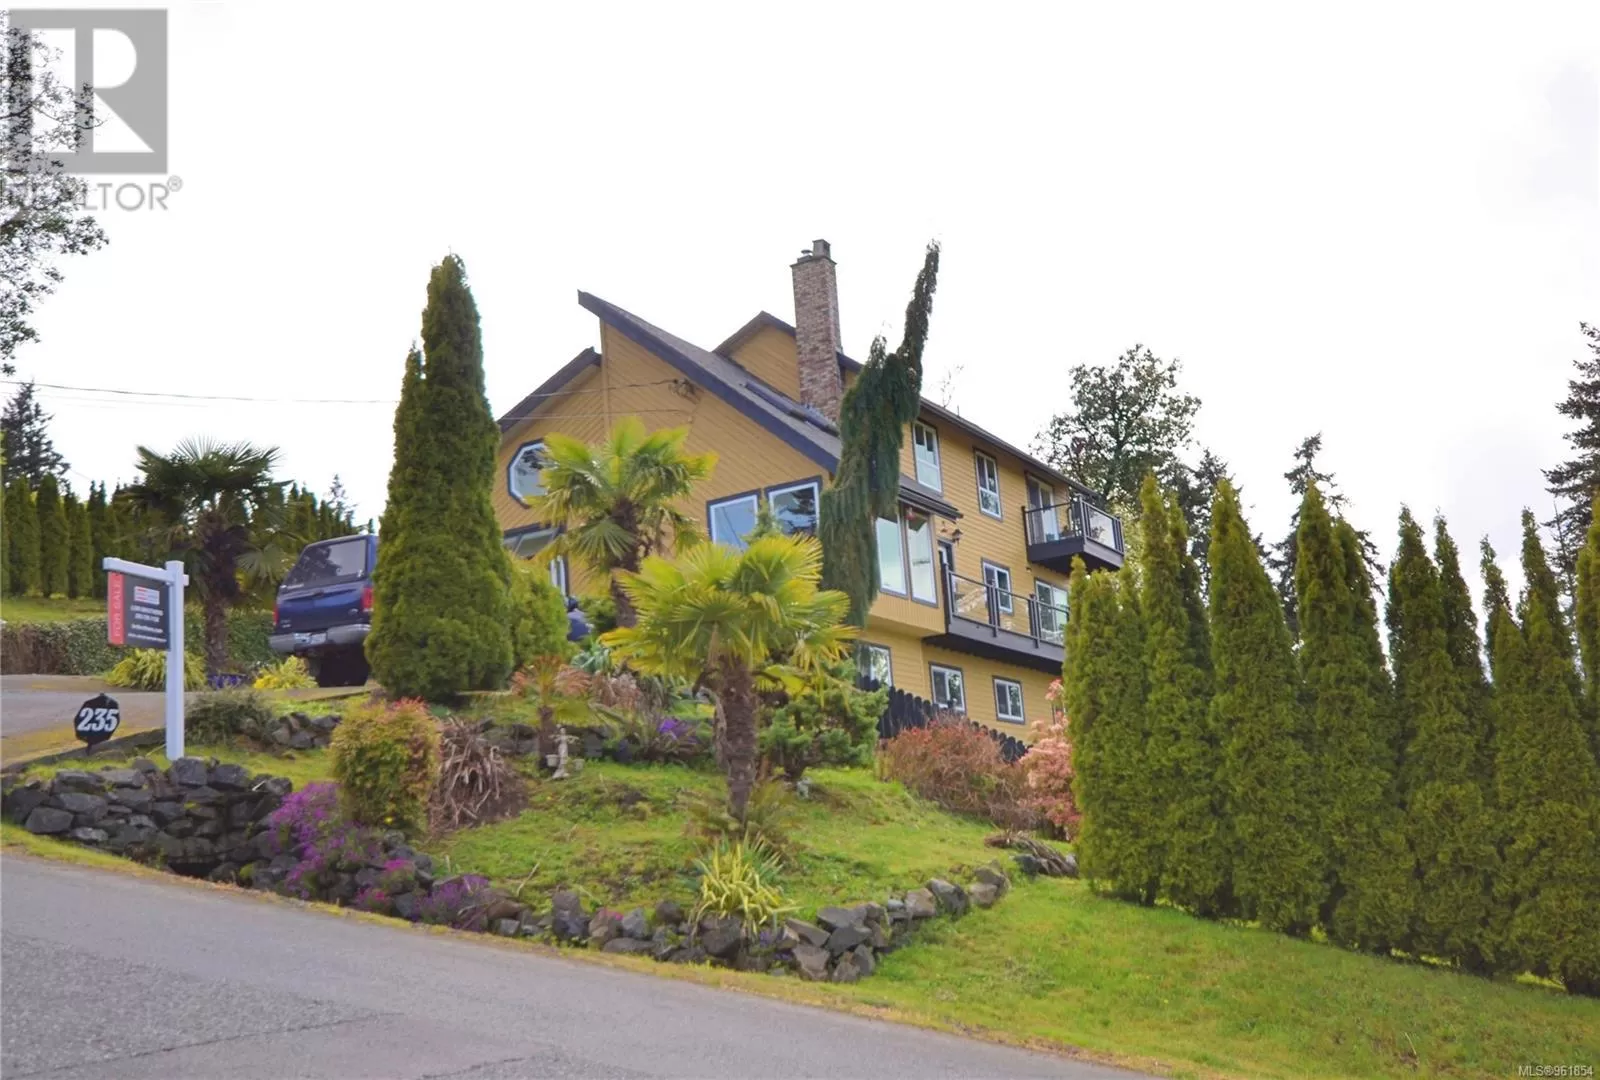 House for rent: 235 King Rd, Nanaimo, British Columbia V9R 6H9